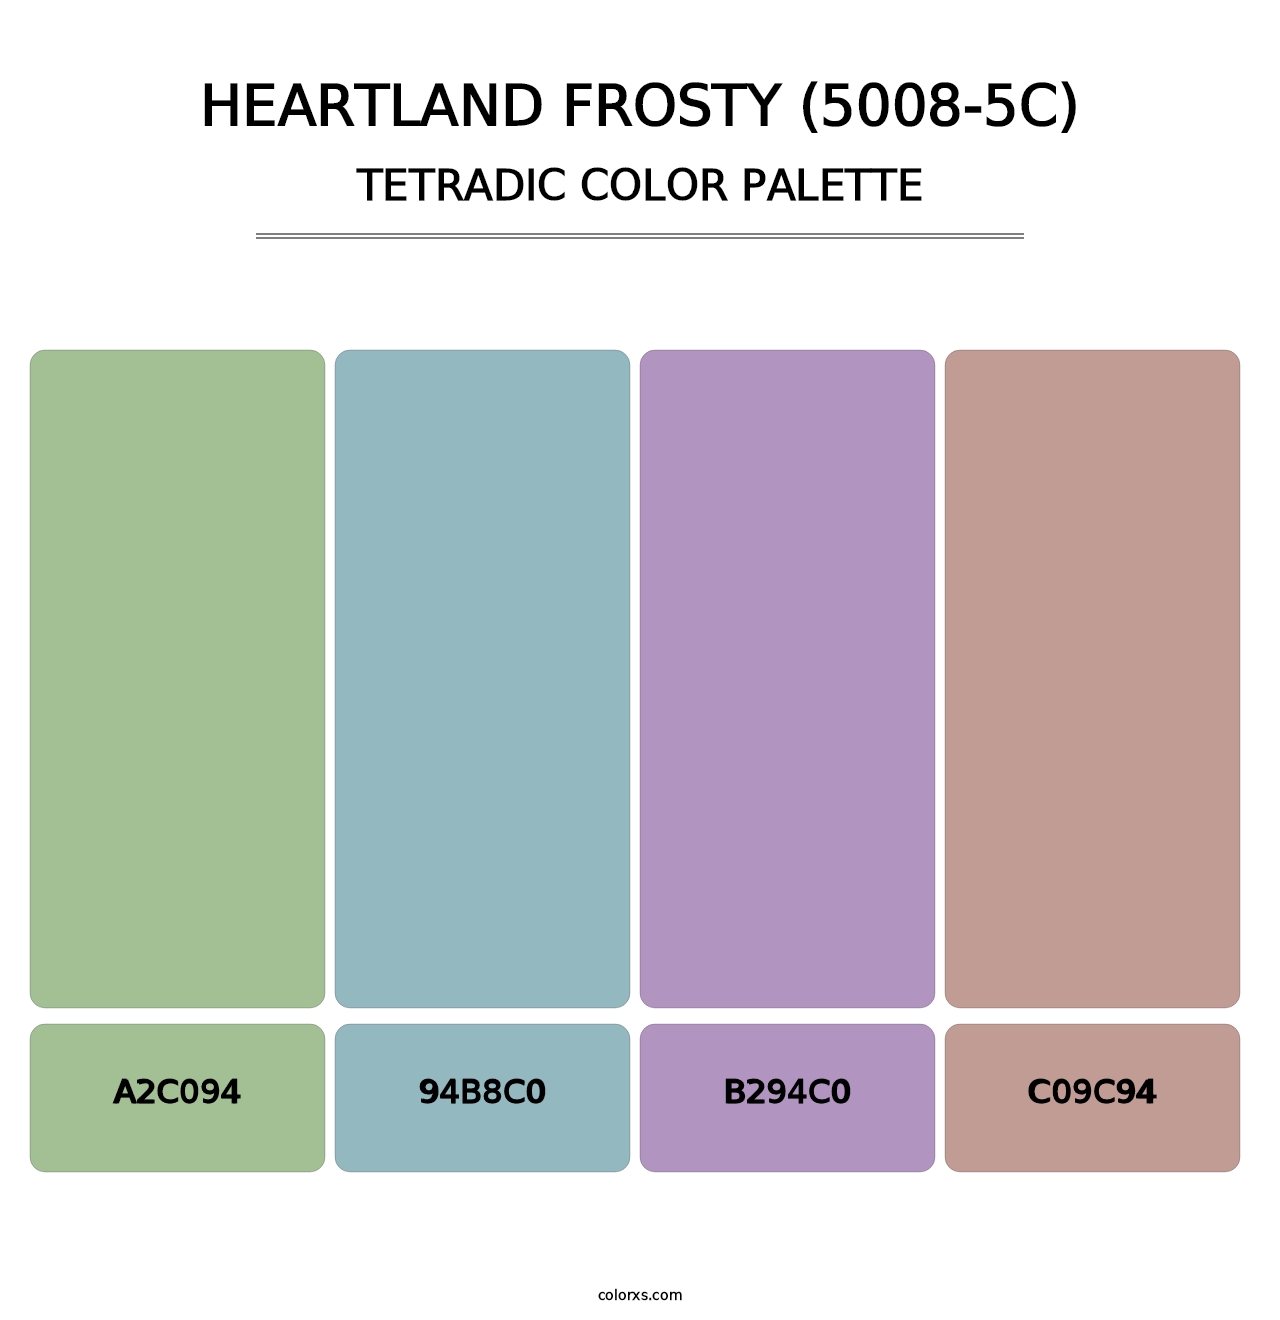 Heartland Frosty (5008-5C) - Tetradic Color Palette